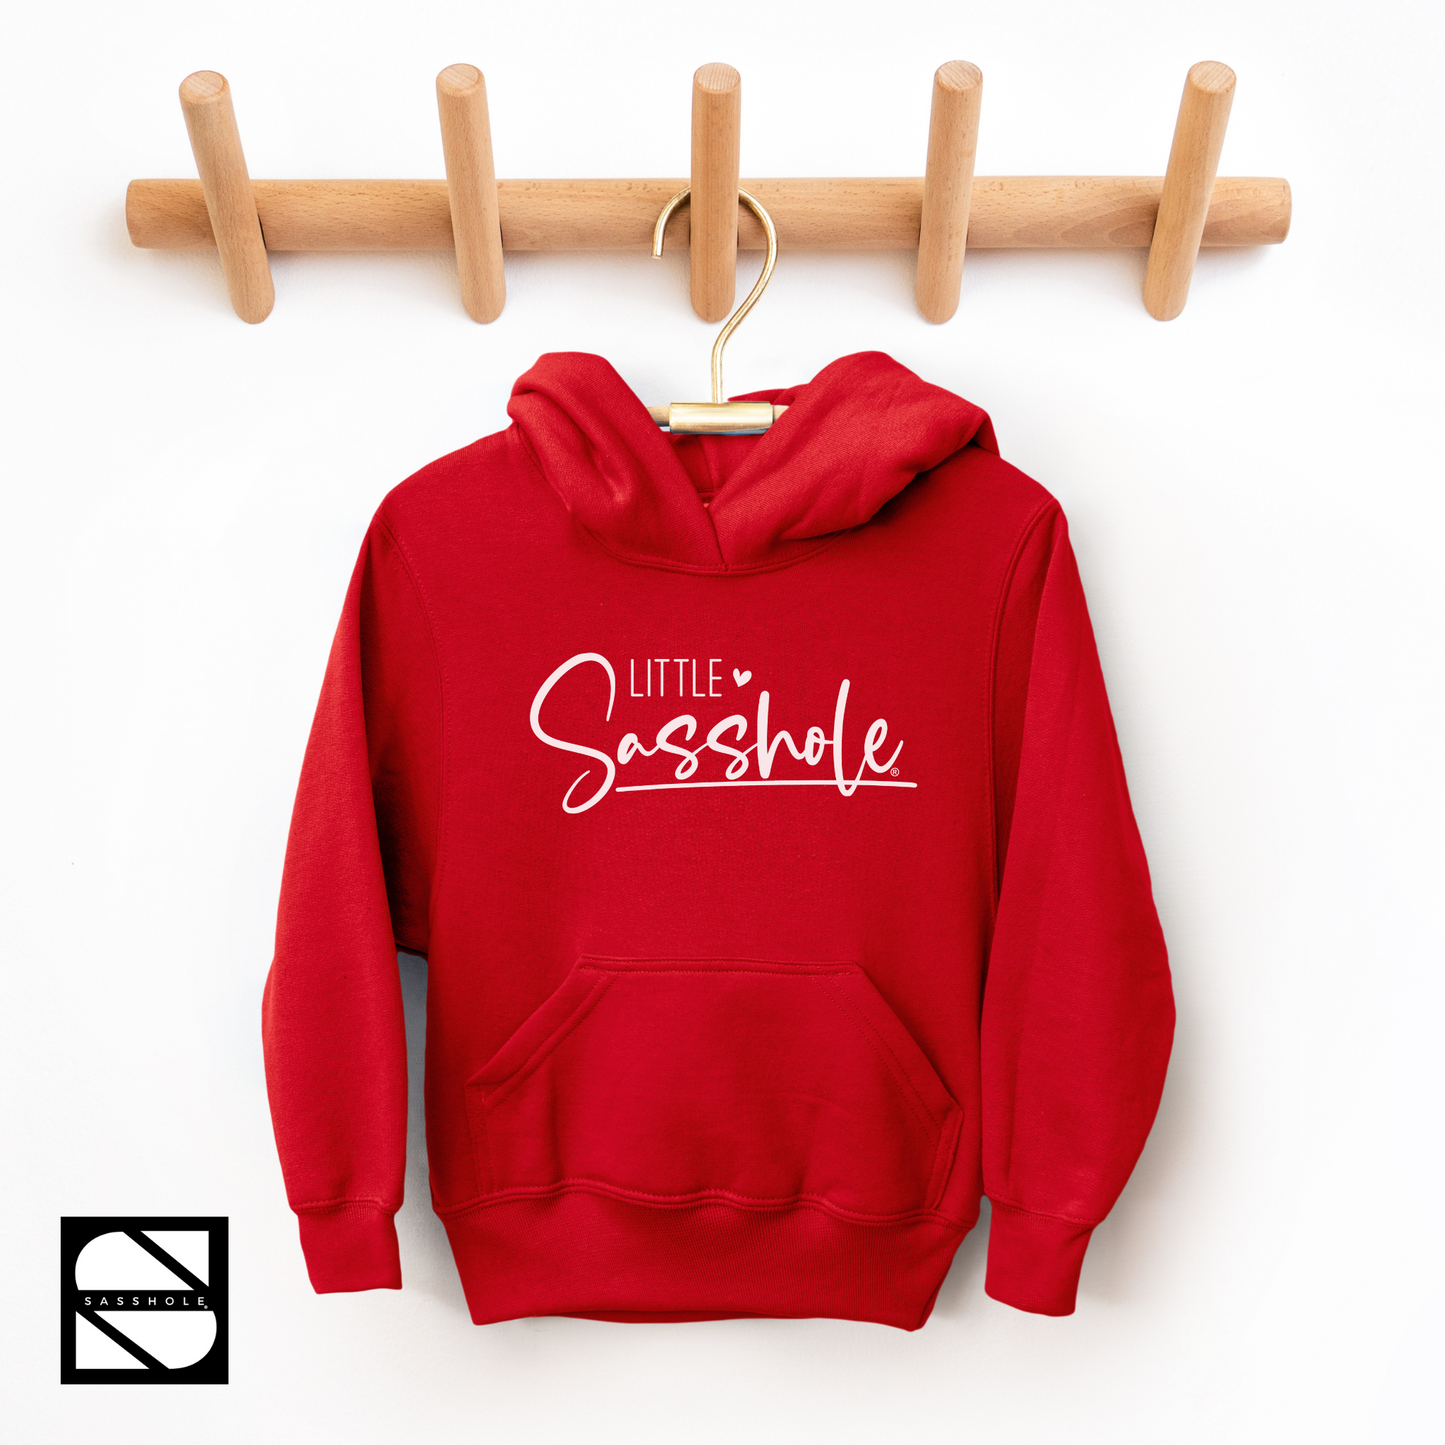 girls sasshole hoodie red